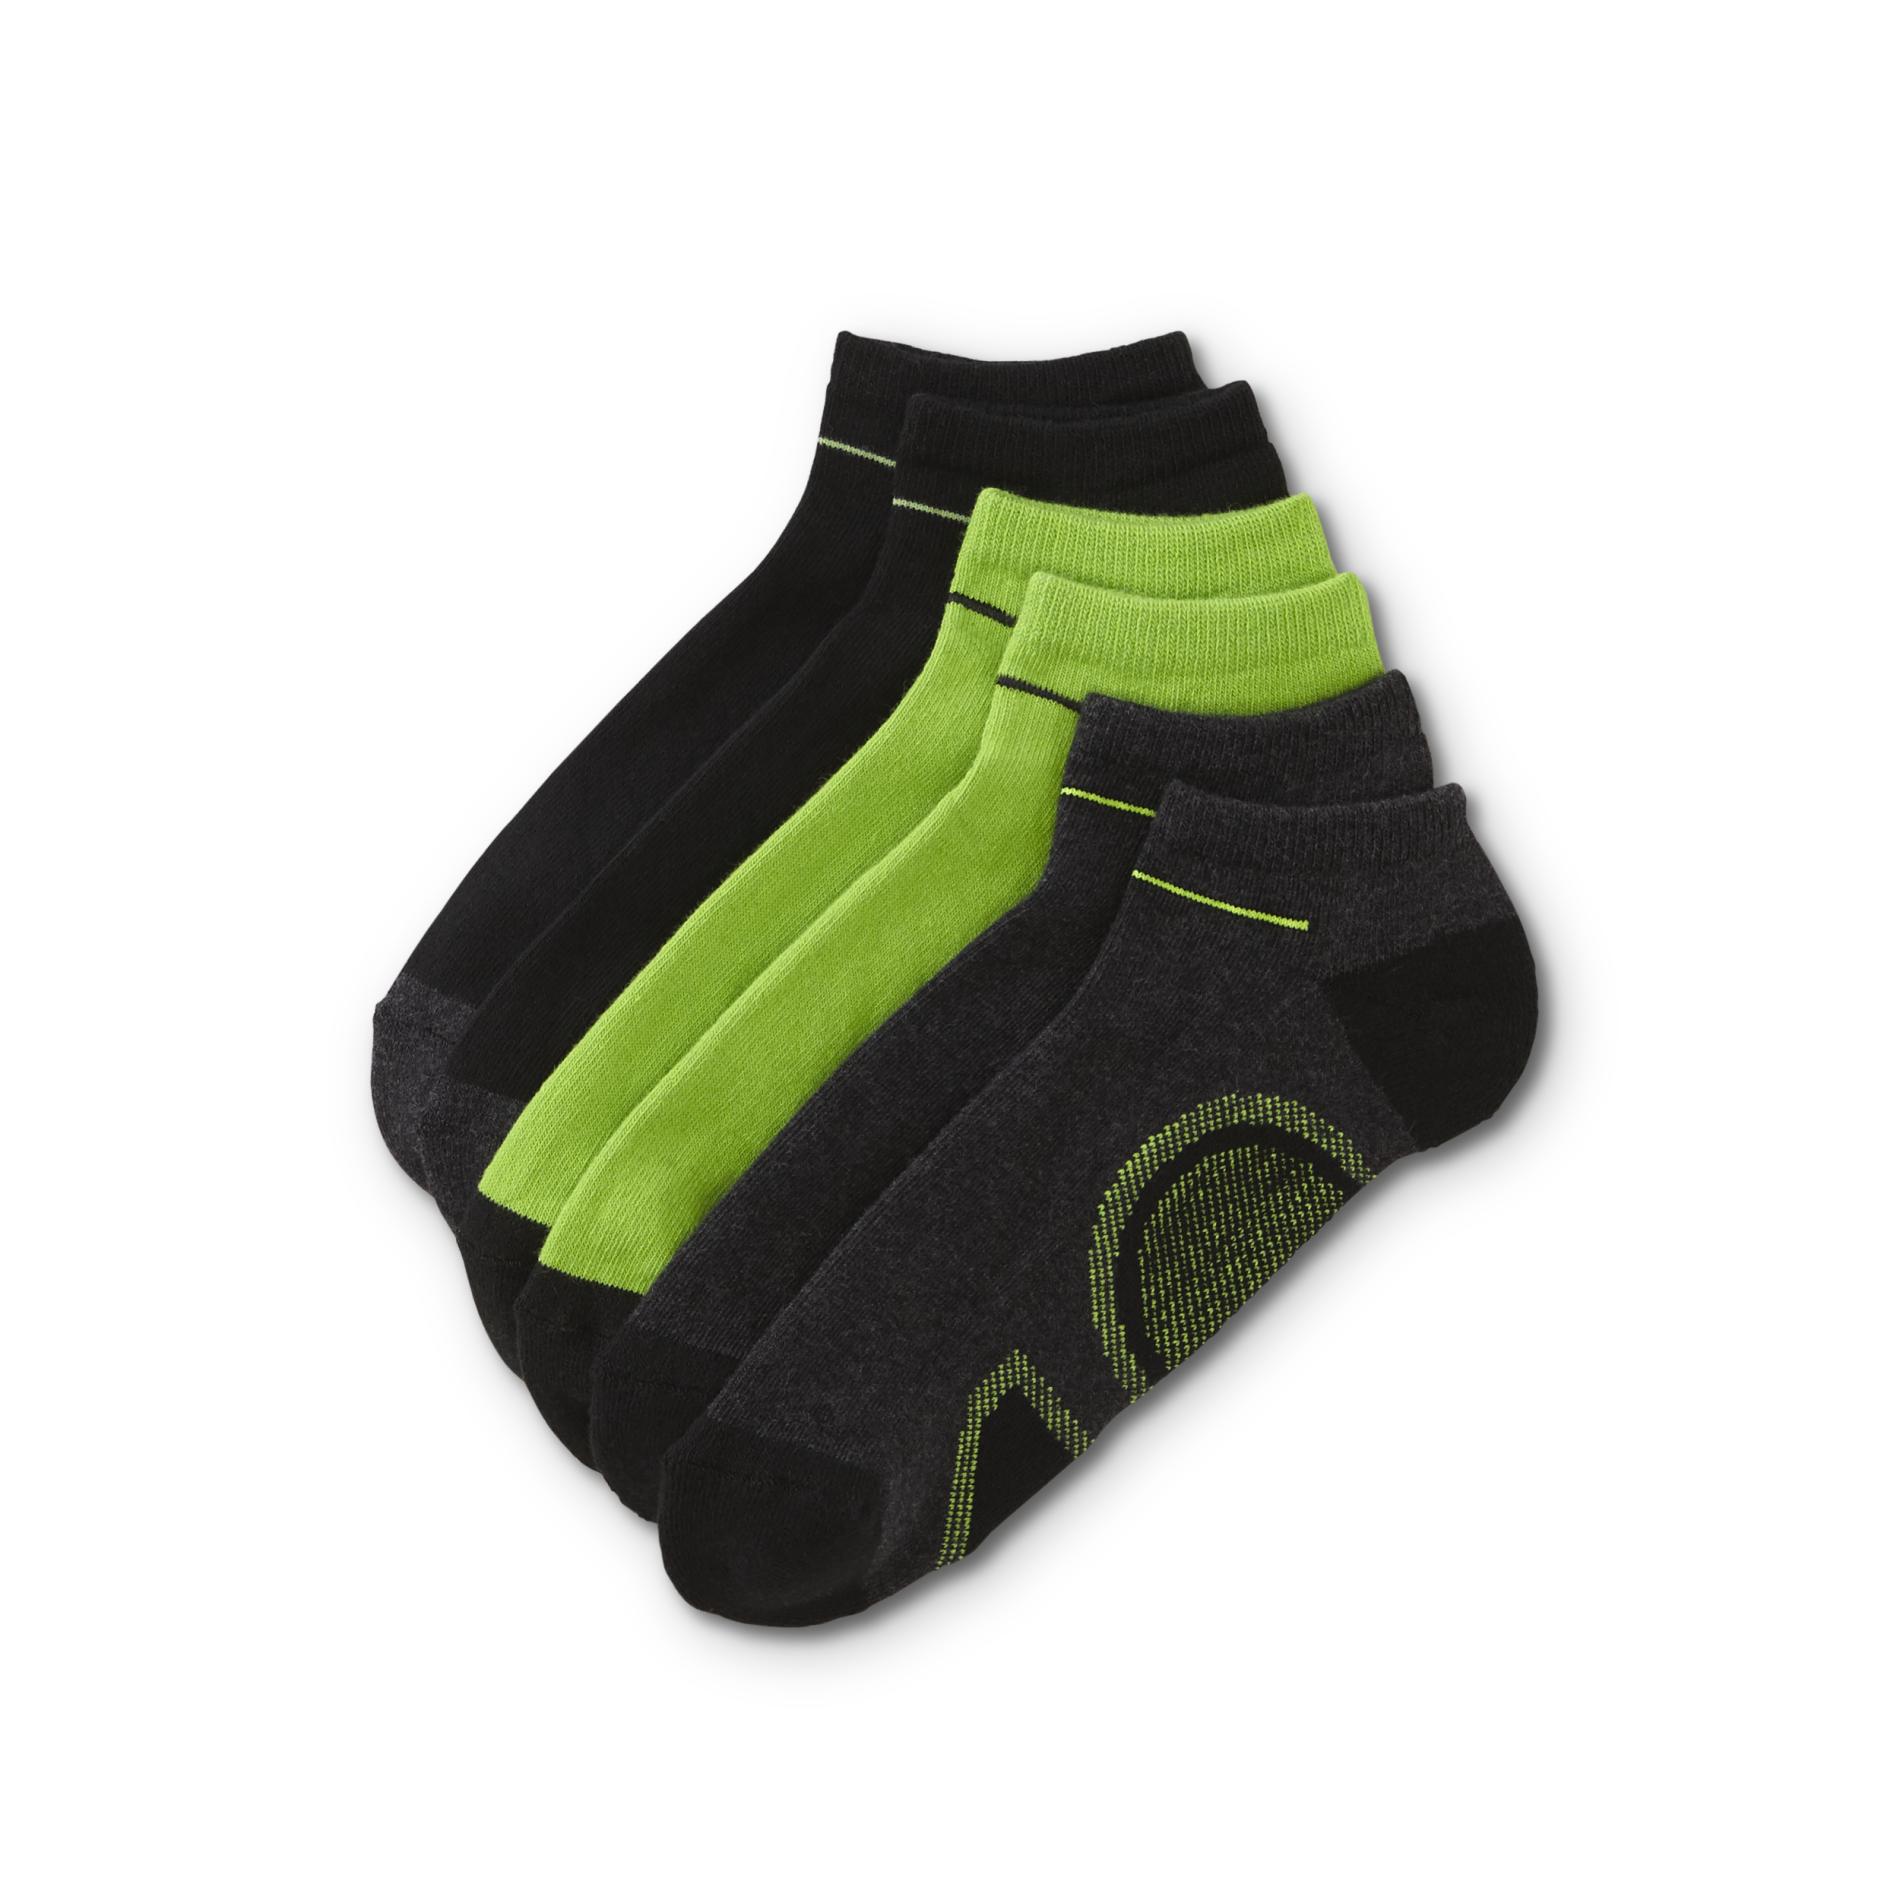 Athletech Men's 6-Pairs Low-Cut Athletic Socks